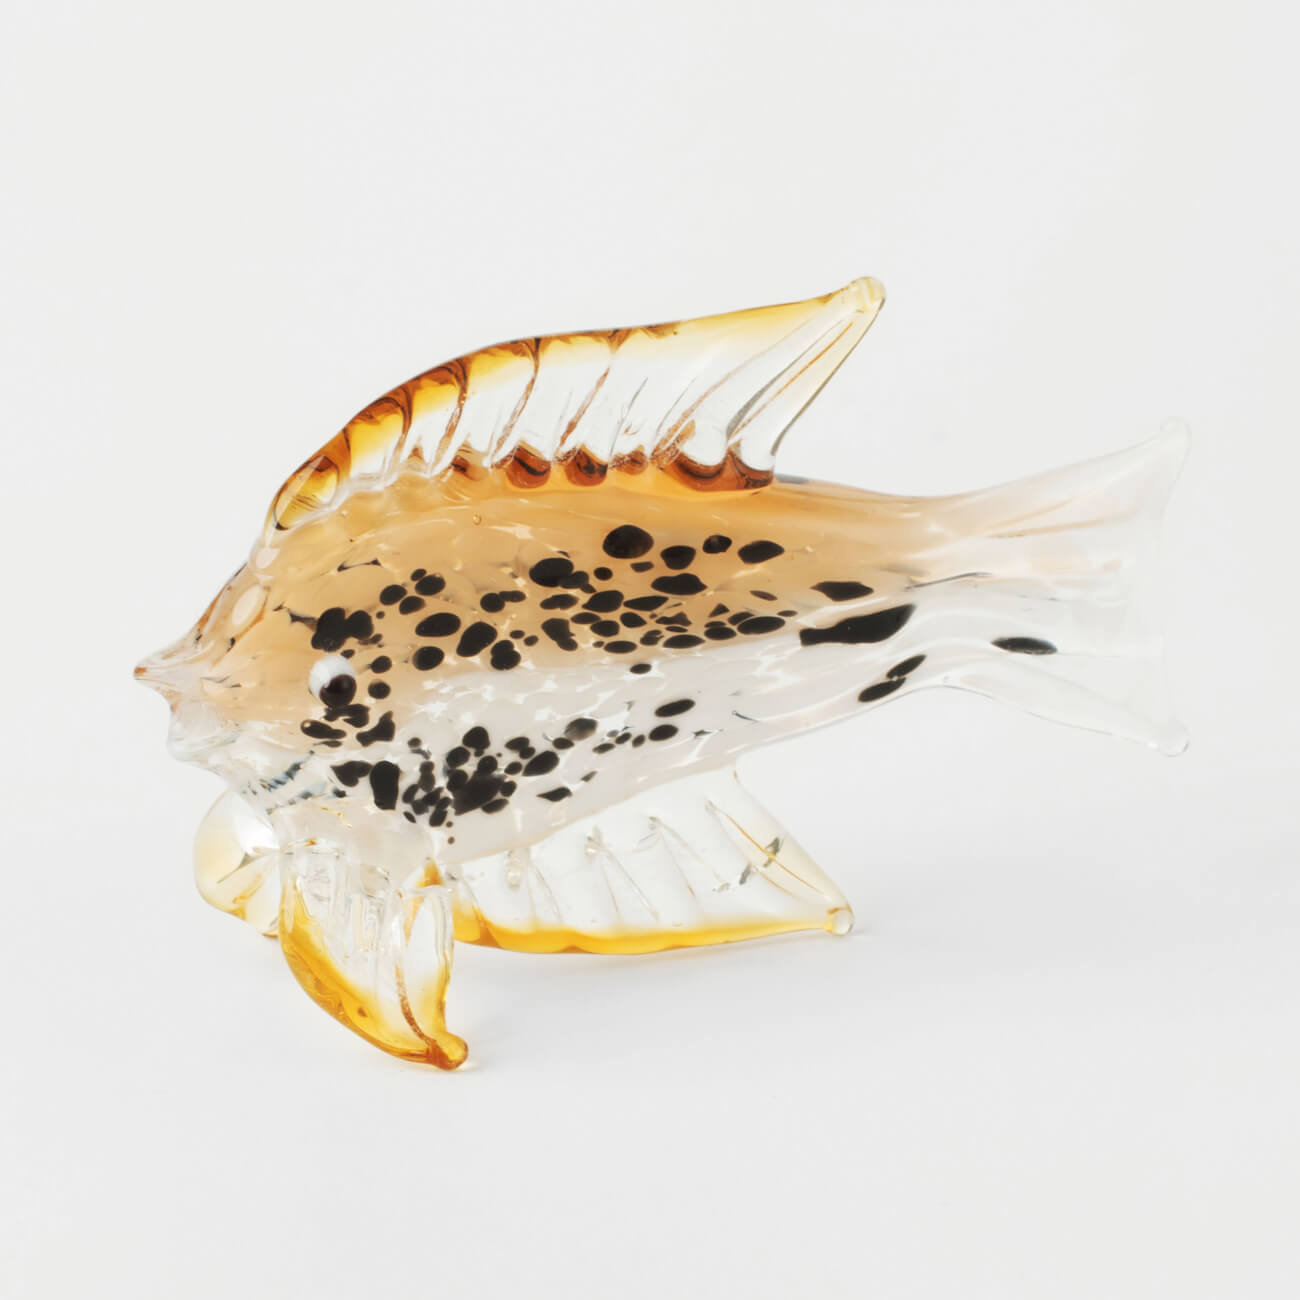 Statuette, 6 cm, glass, amber, Fish, Vitreous